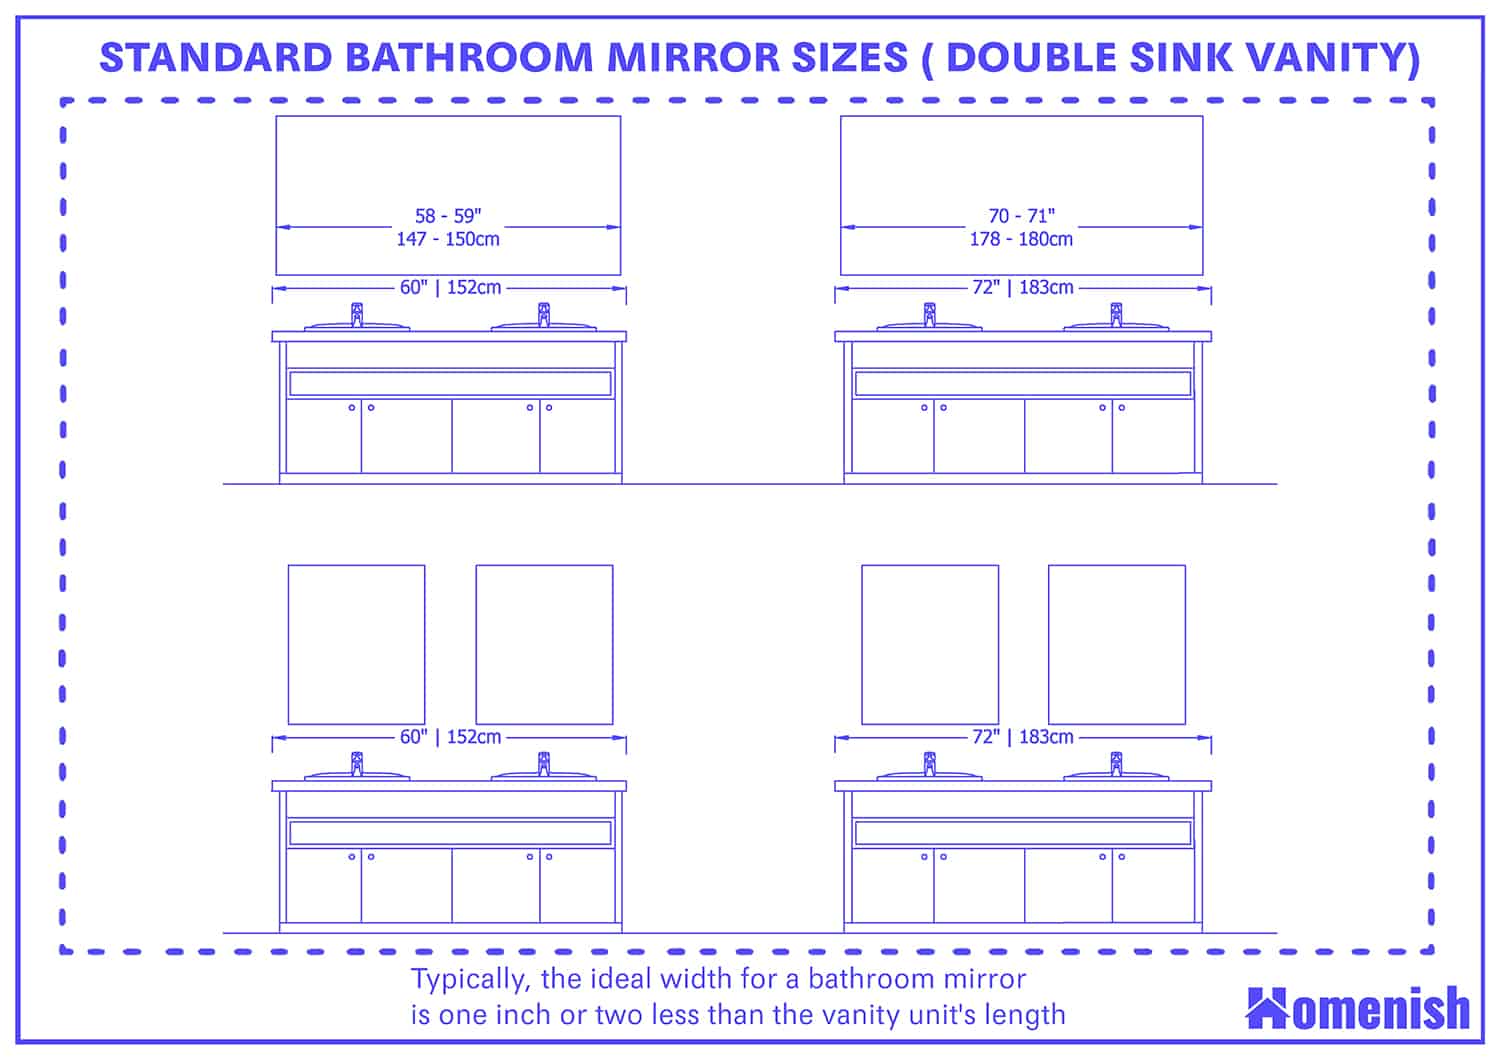 Standard Bathroom Mirror Sizes For Double Sink Vanity